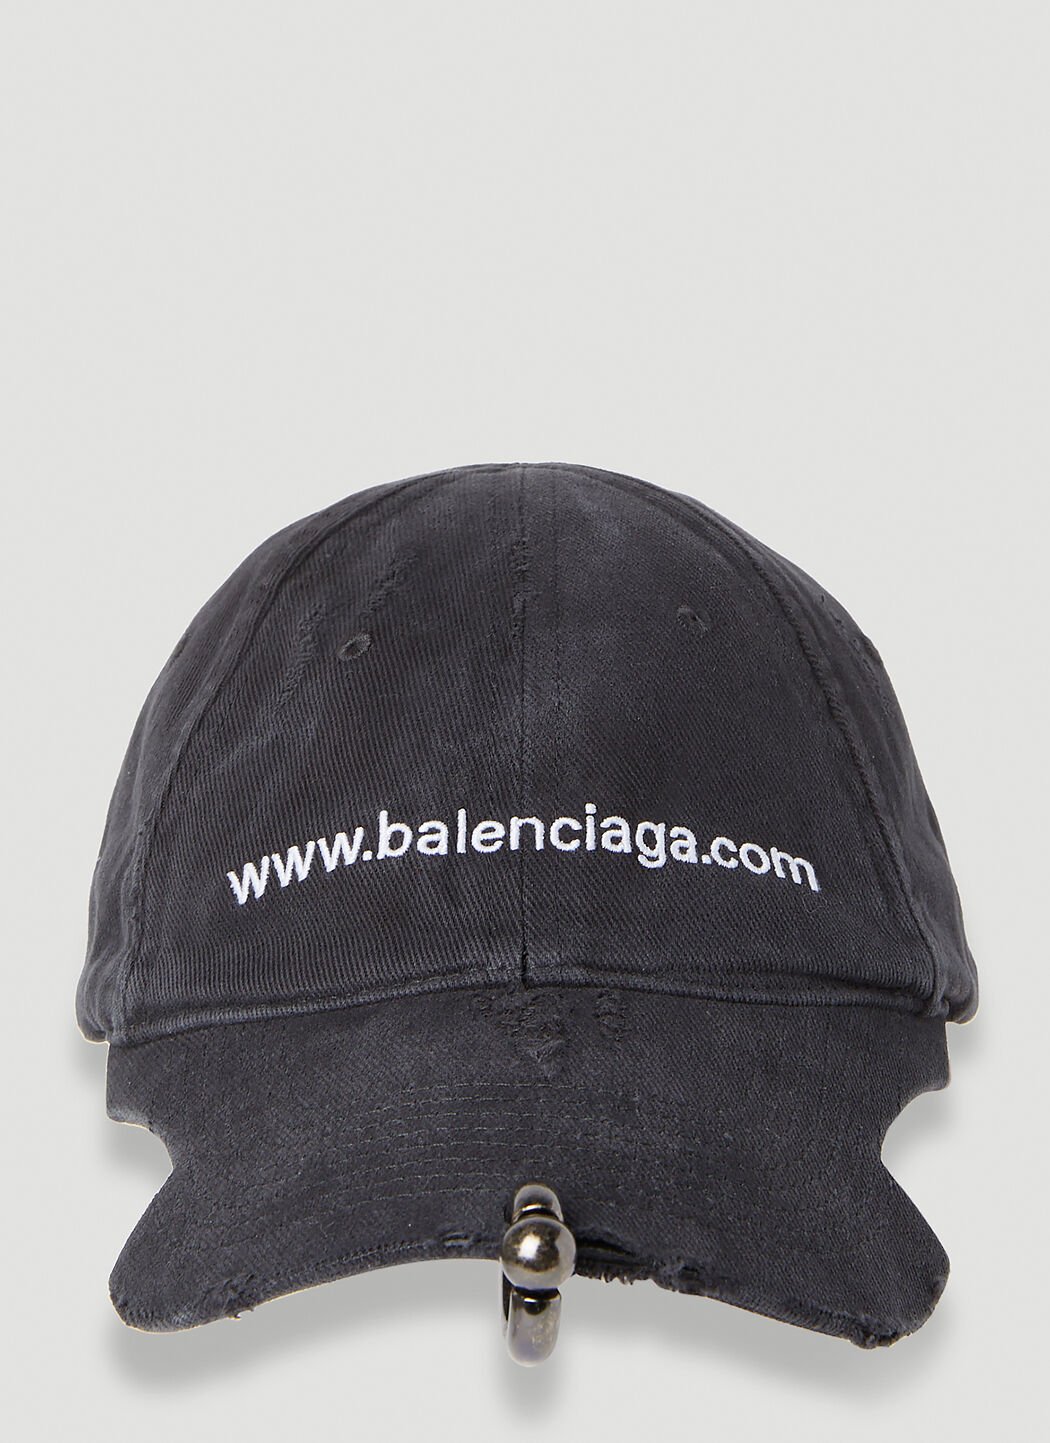 Balenciaga Pierced Website Baseball Cap White bal0253030